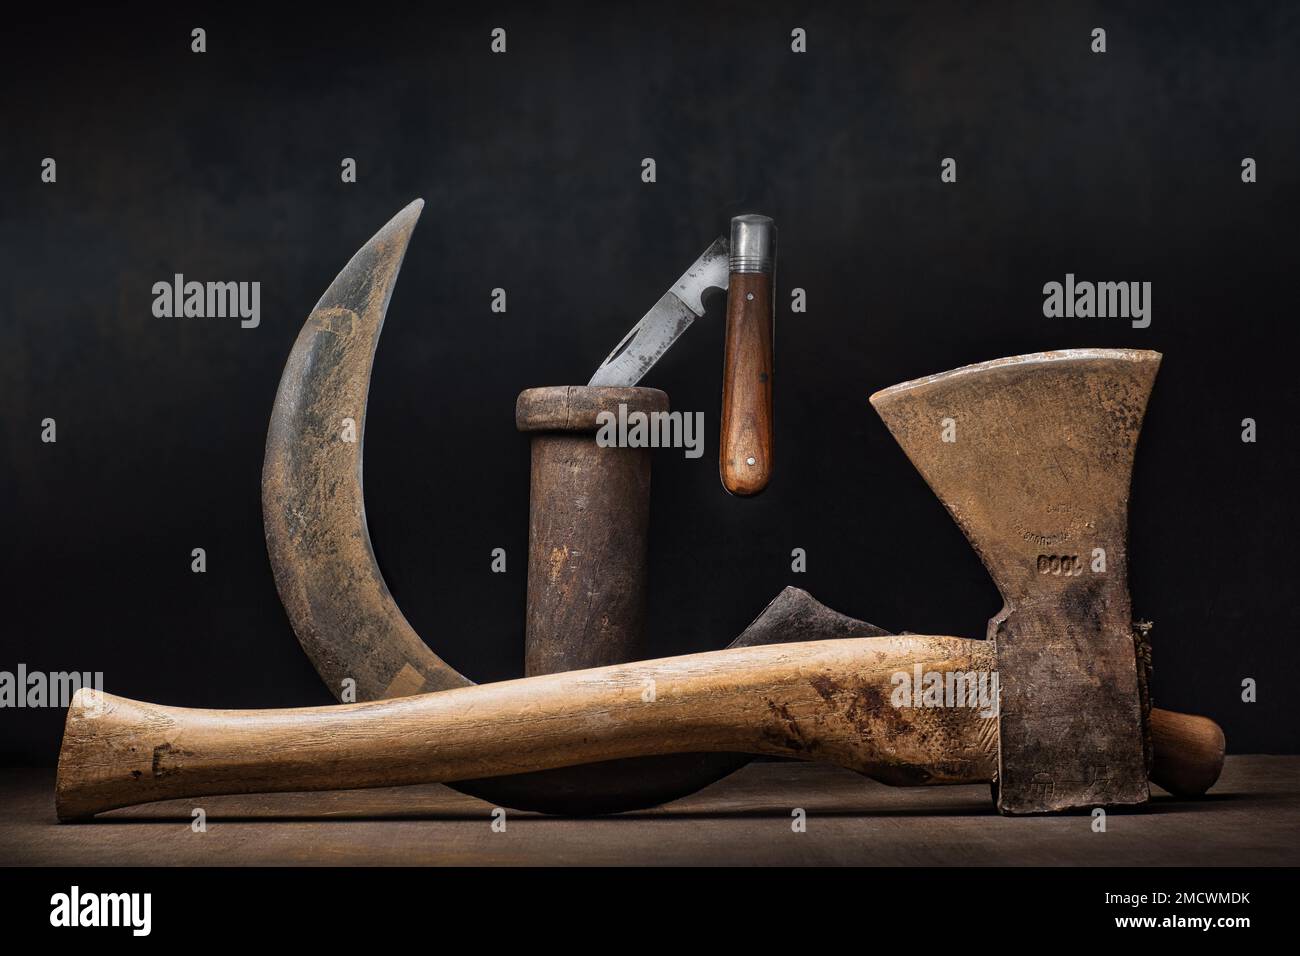 https://c8.alamy.com/comp/2MCWMDK/topic-craft-work-tool-diy-still-life-with-axe-sickle-and-pocket-knife-on-wooden-spool-studio-shot-symbol-photo-2MCWMDK.jpg